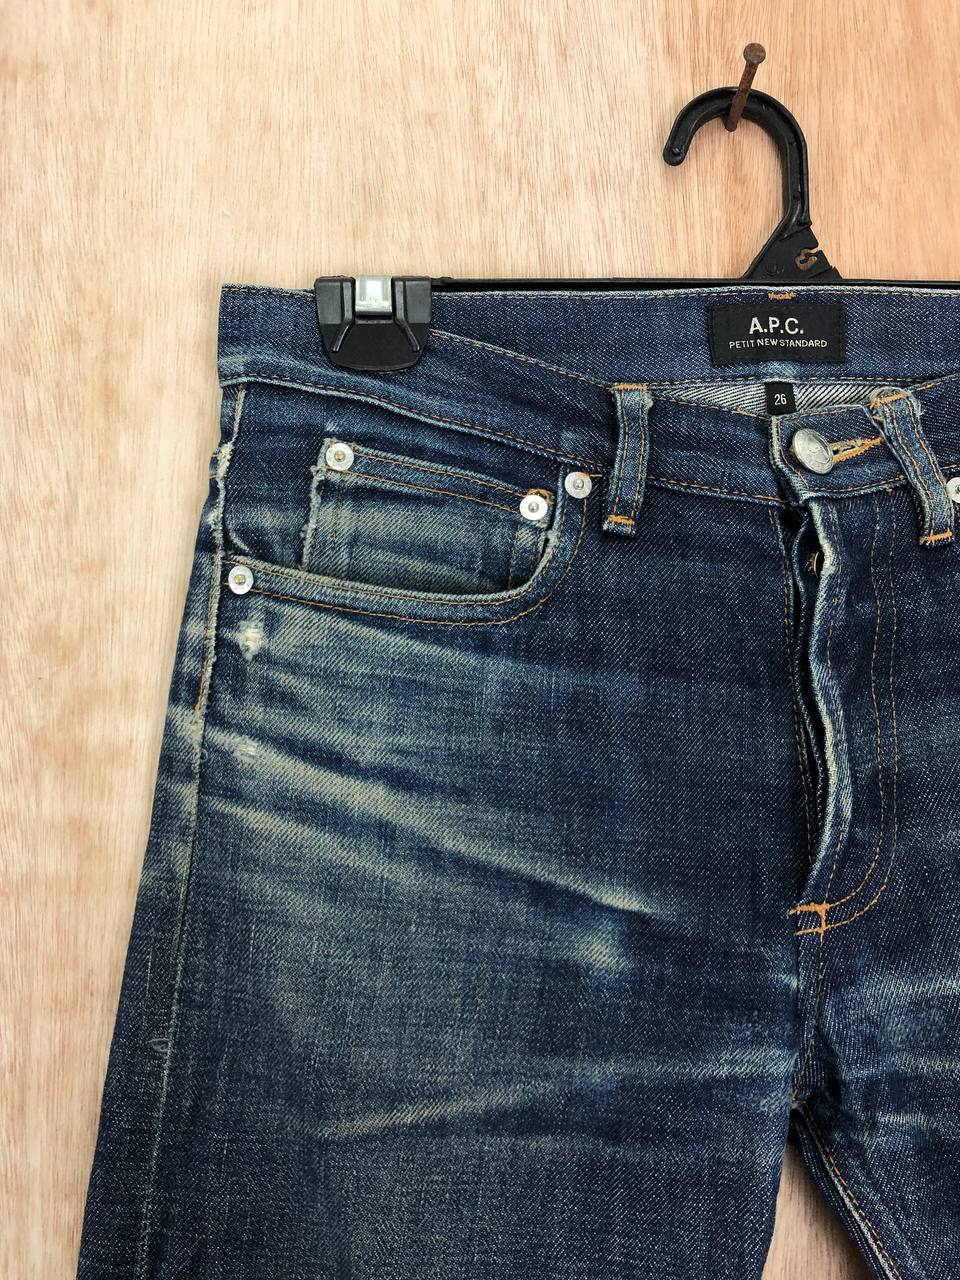 APC Petit Standard Jeans Distressed Selvedge - 8